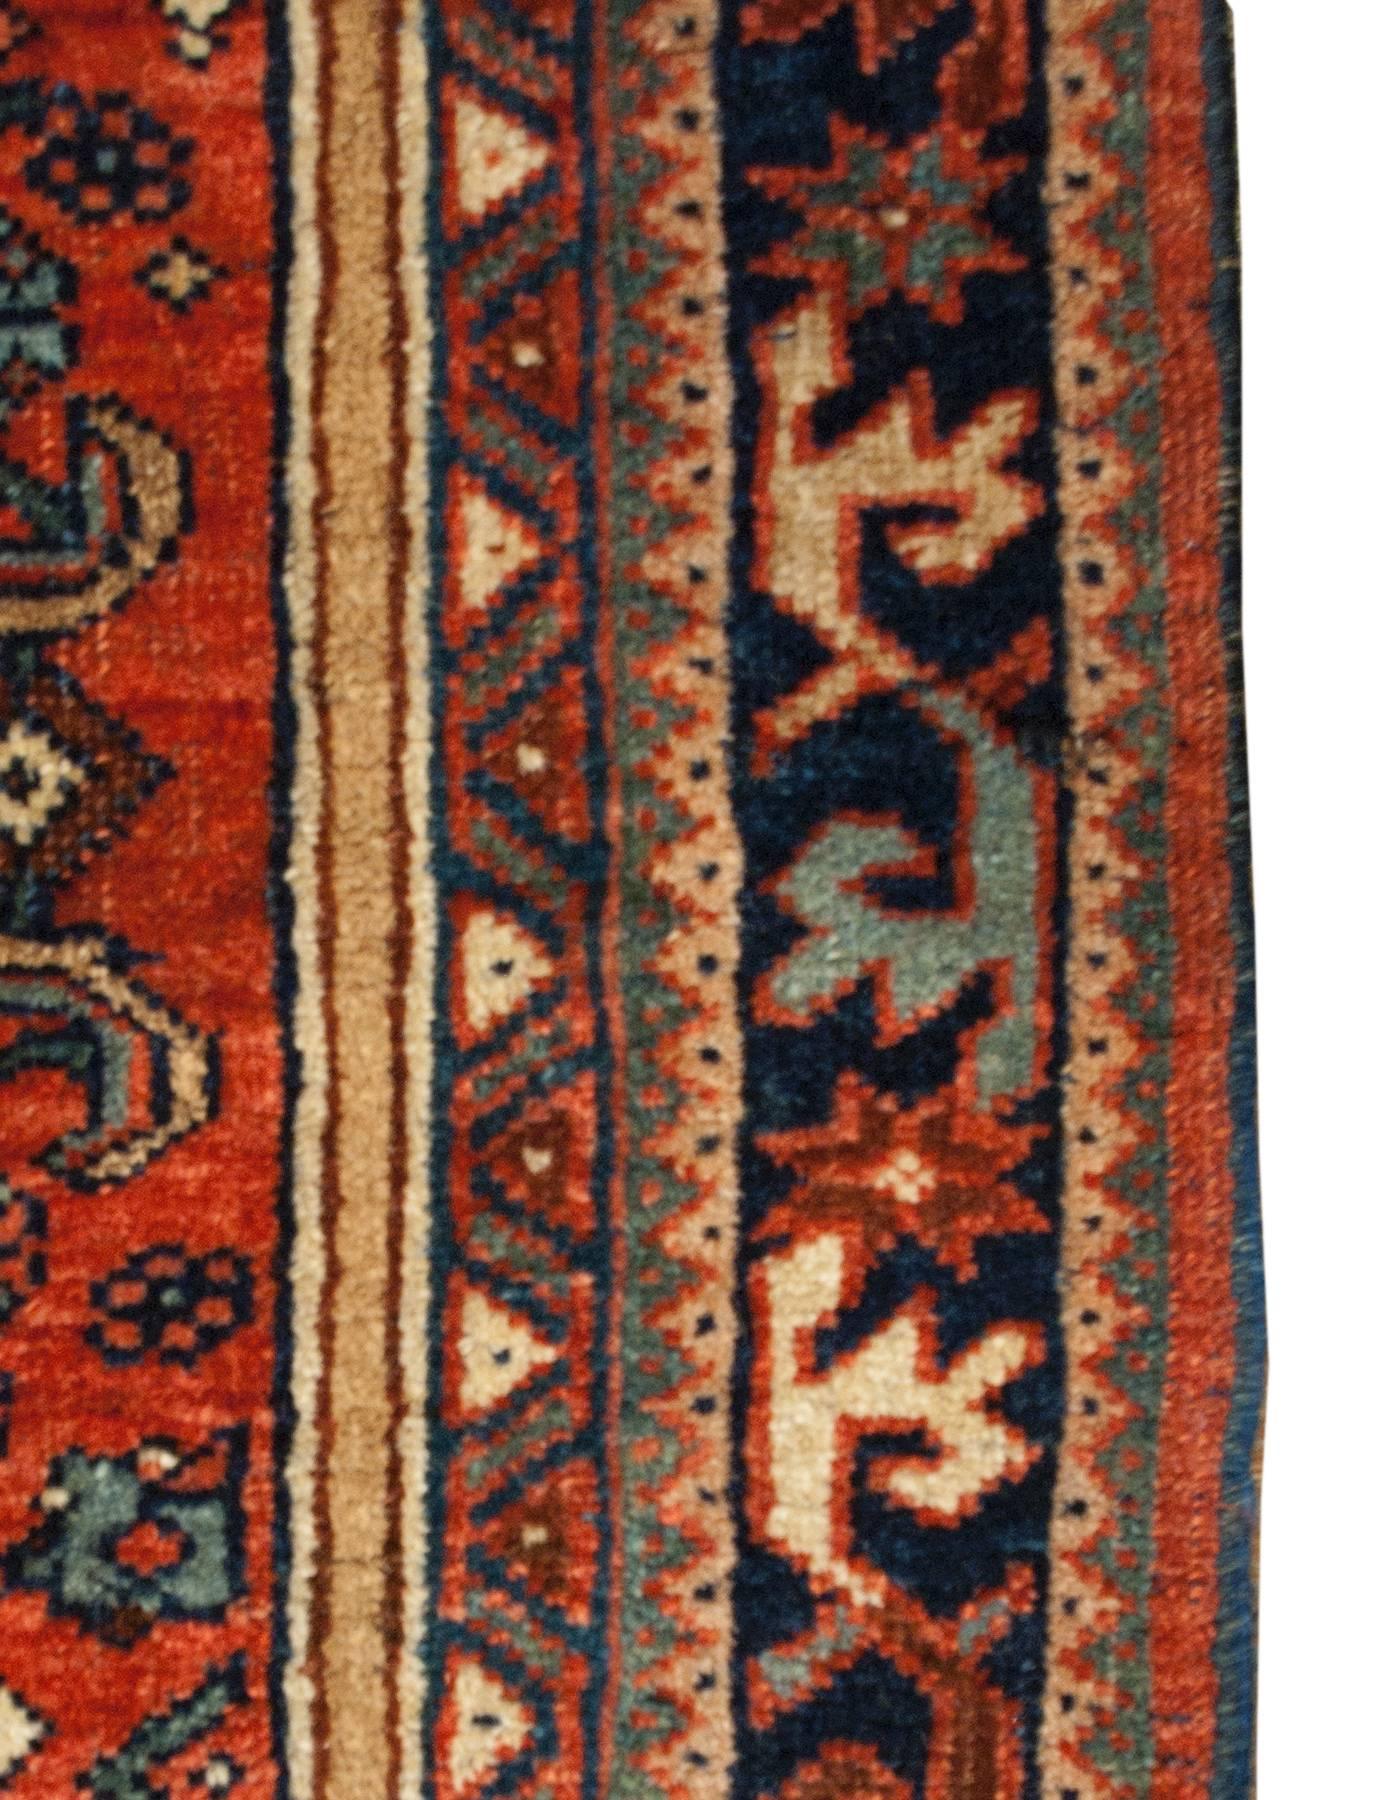 19th century rugs